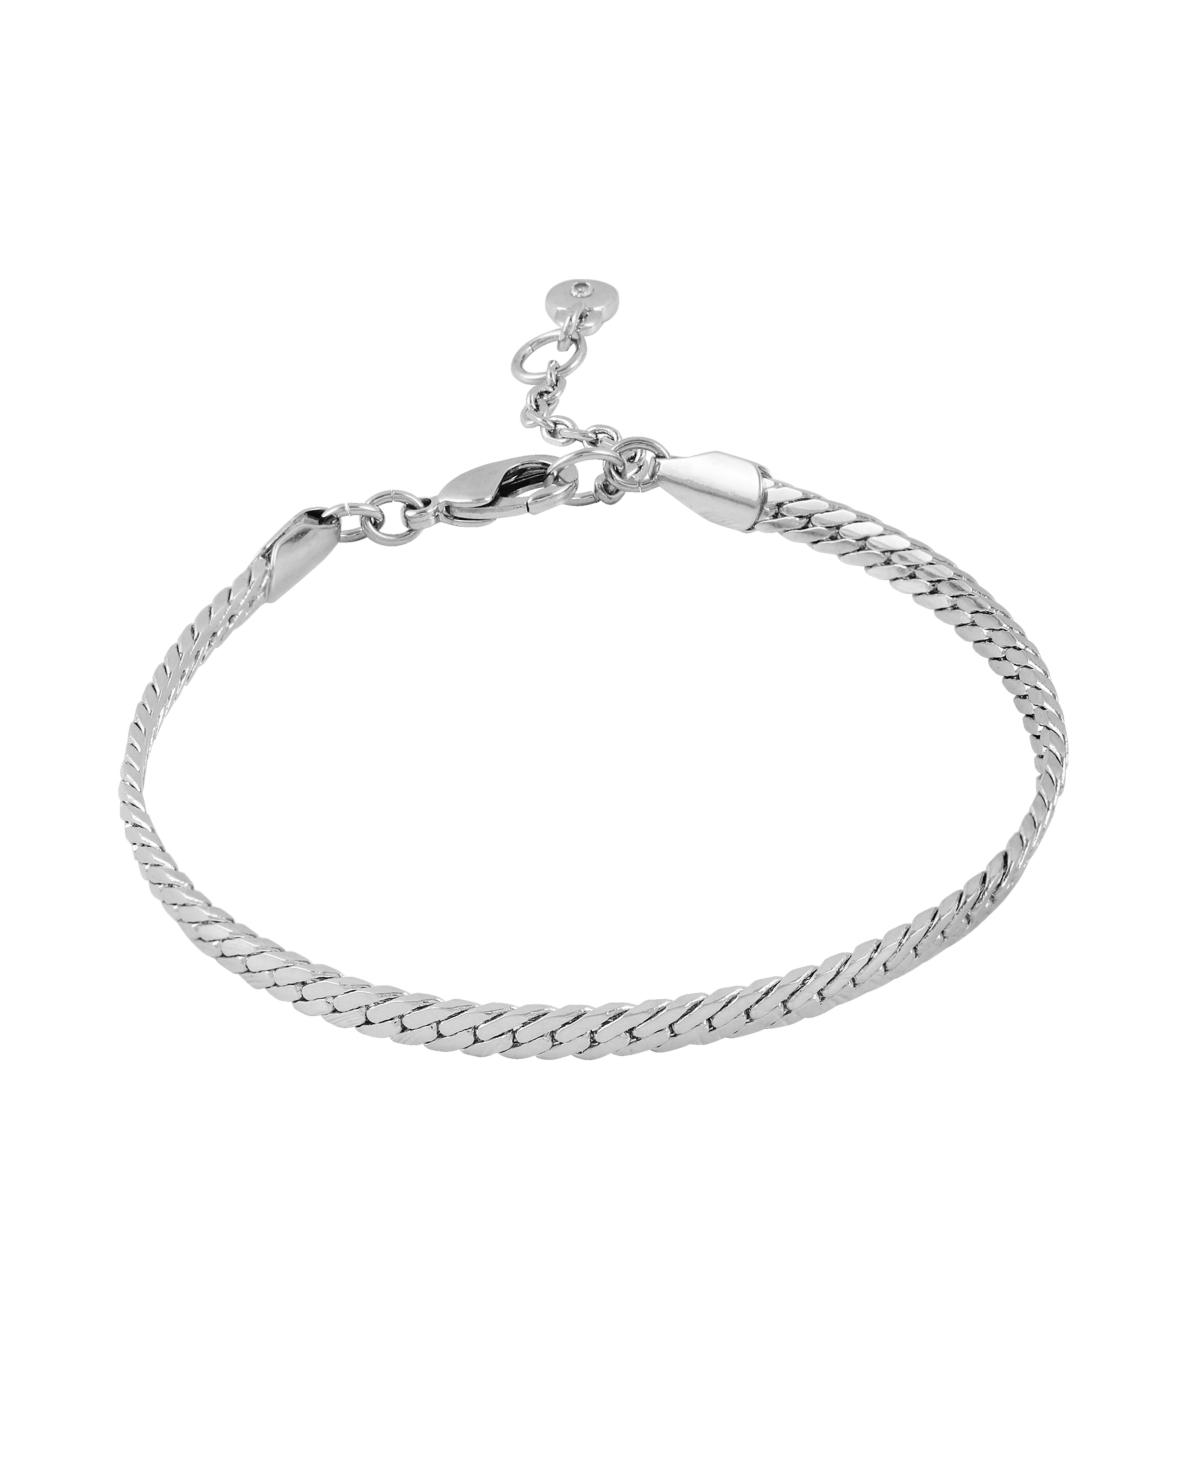 Chain Line Bracelet - Silver-Tone